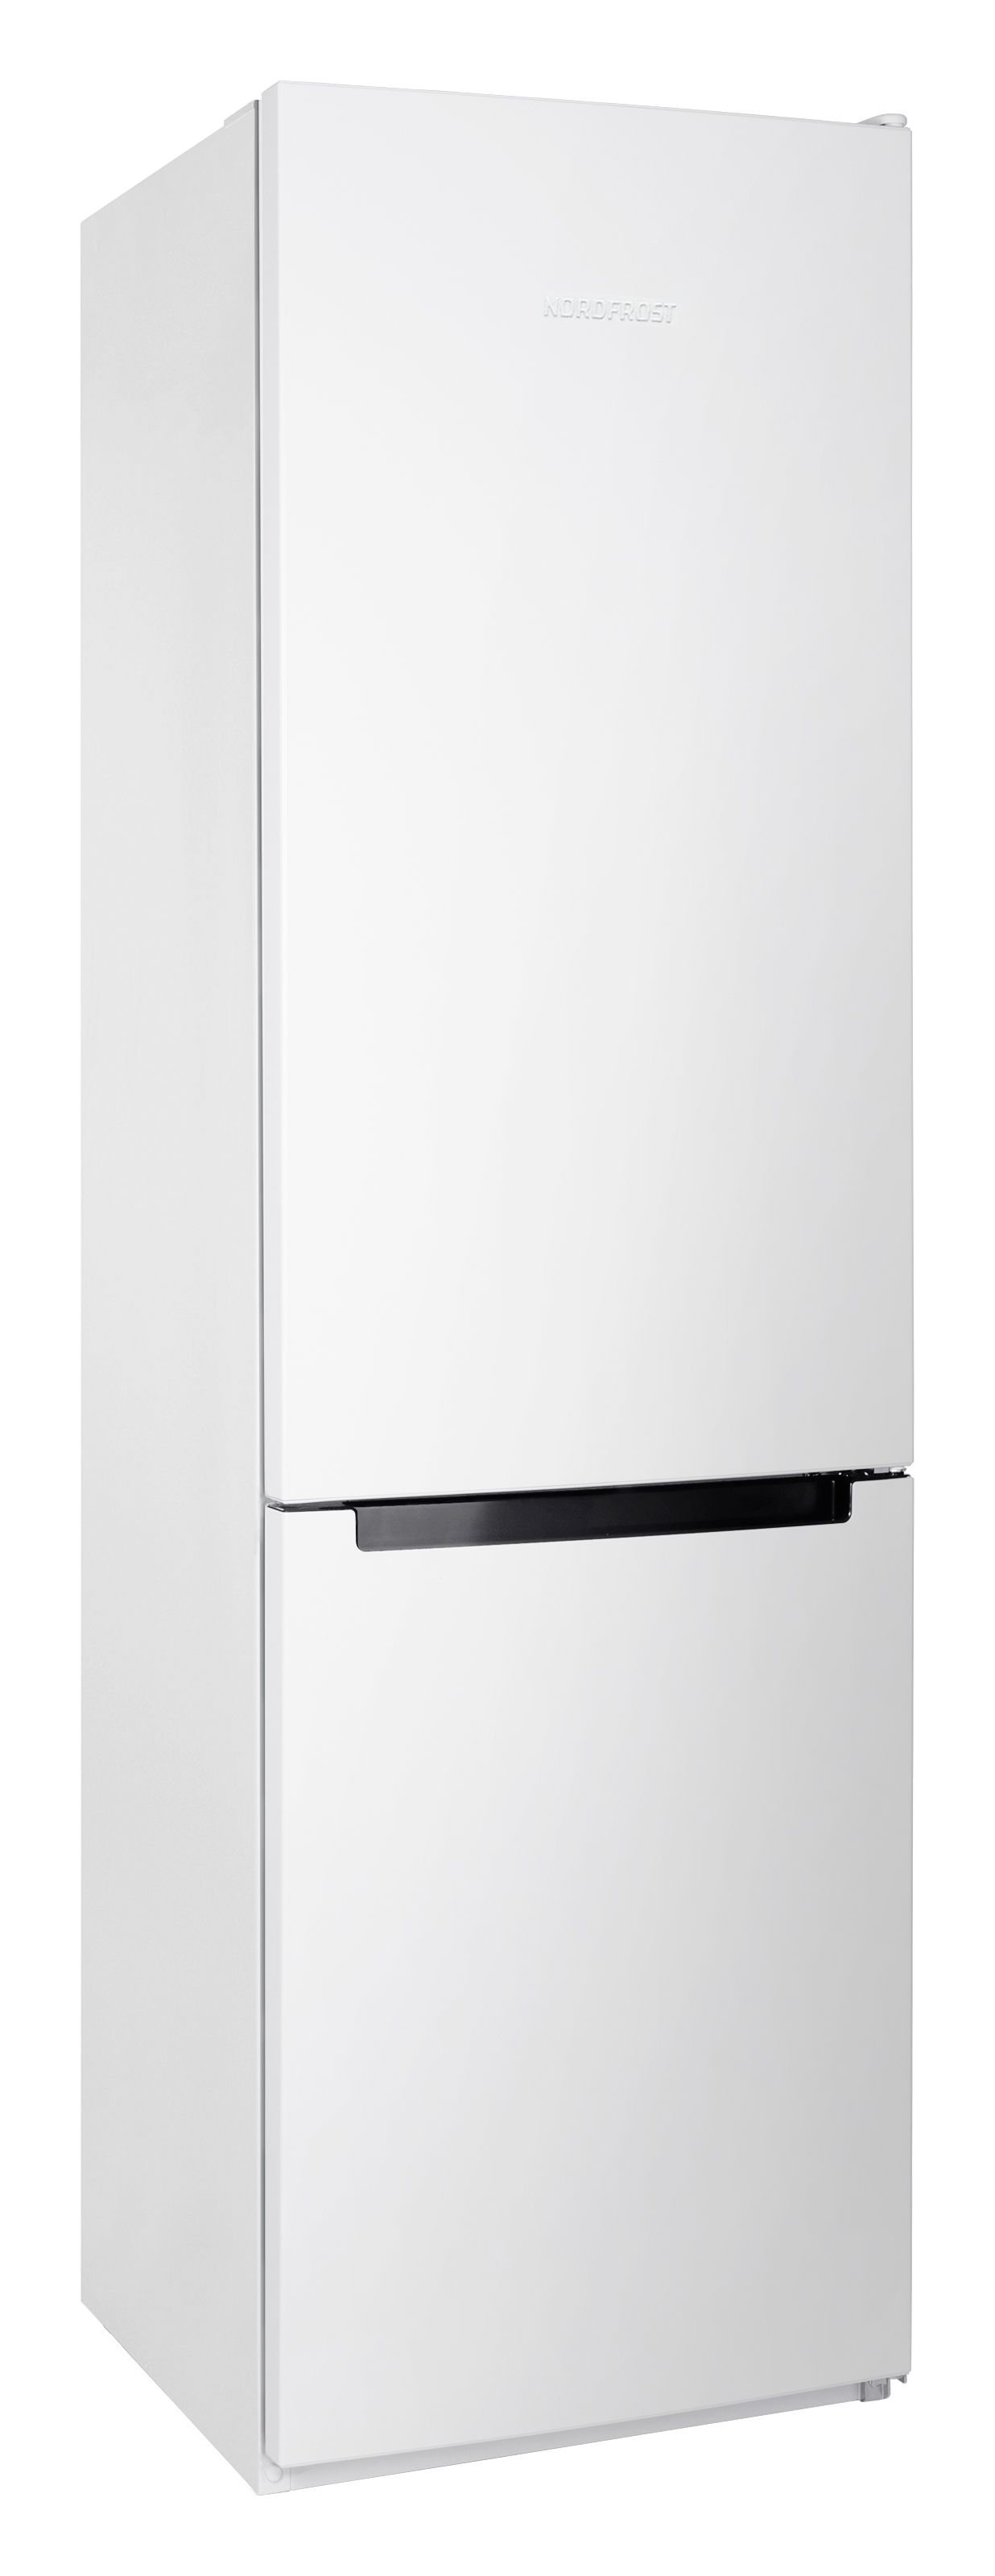 Холодильник NordFrost NRB 154 W белый двухкамерный холодильник nordfrost nrb 164 nf or